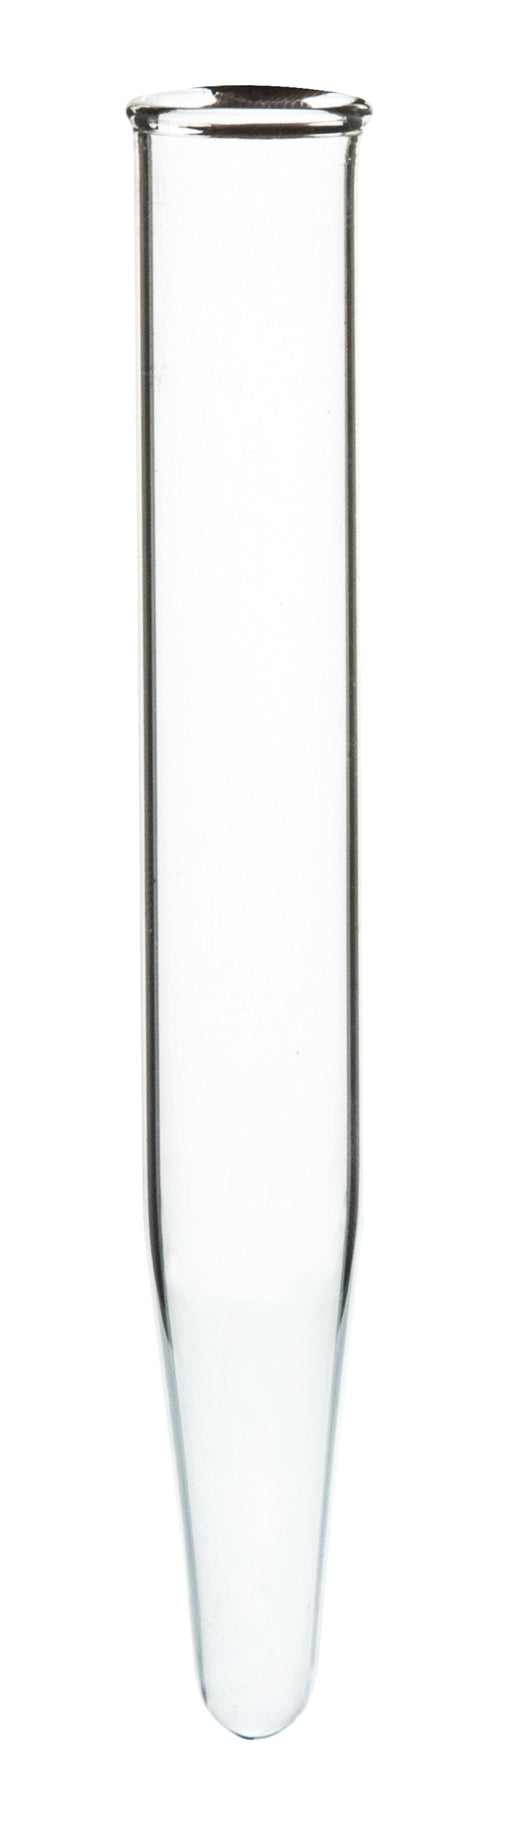 Centrifuge Tube, 10ml - Borosilicate 3.3 Glass, Conical Shape, Ungraduated - Eisco Labs